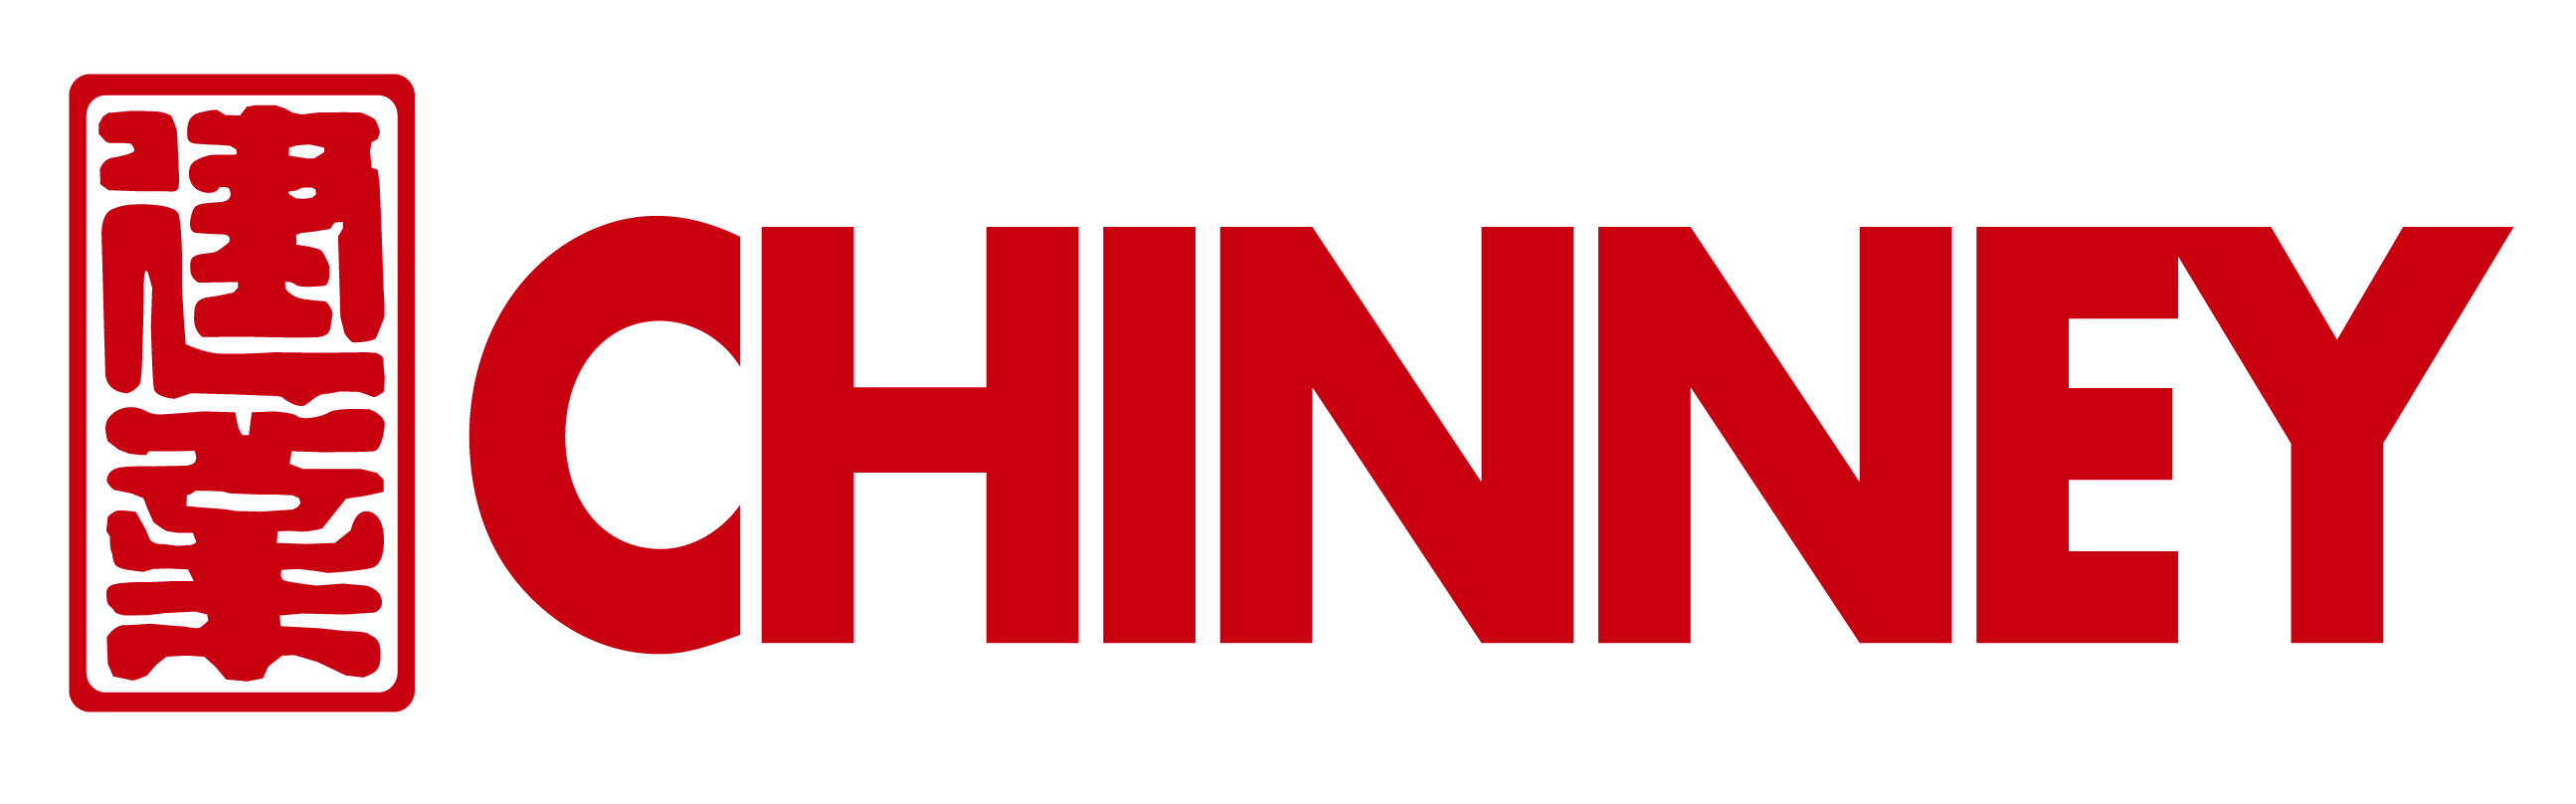 Chinney Construction Co. Ltd. 建業建築有限公司